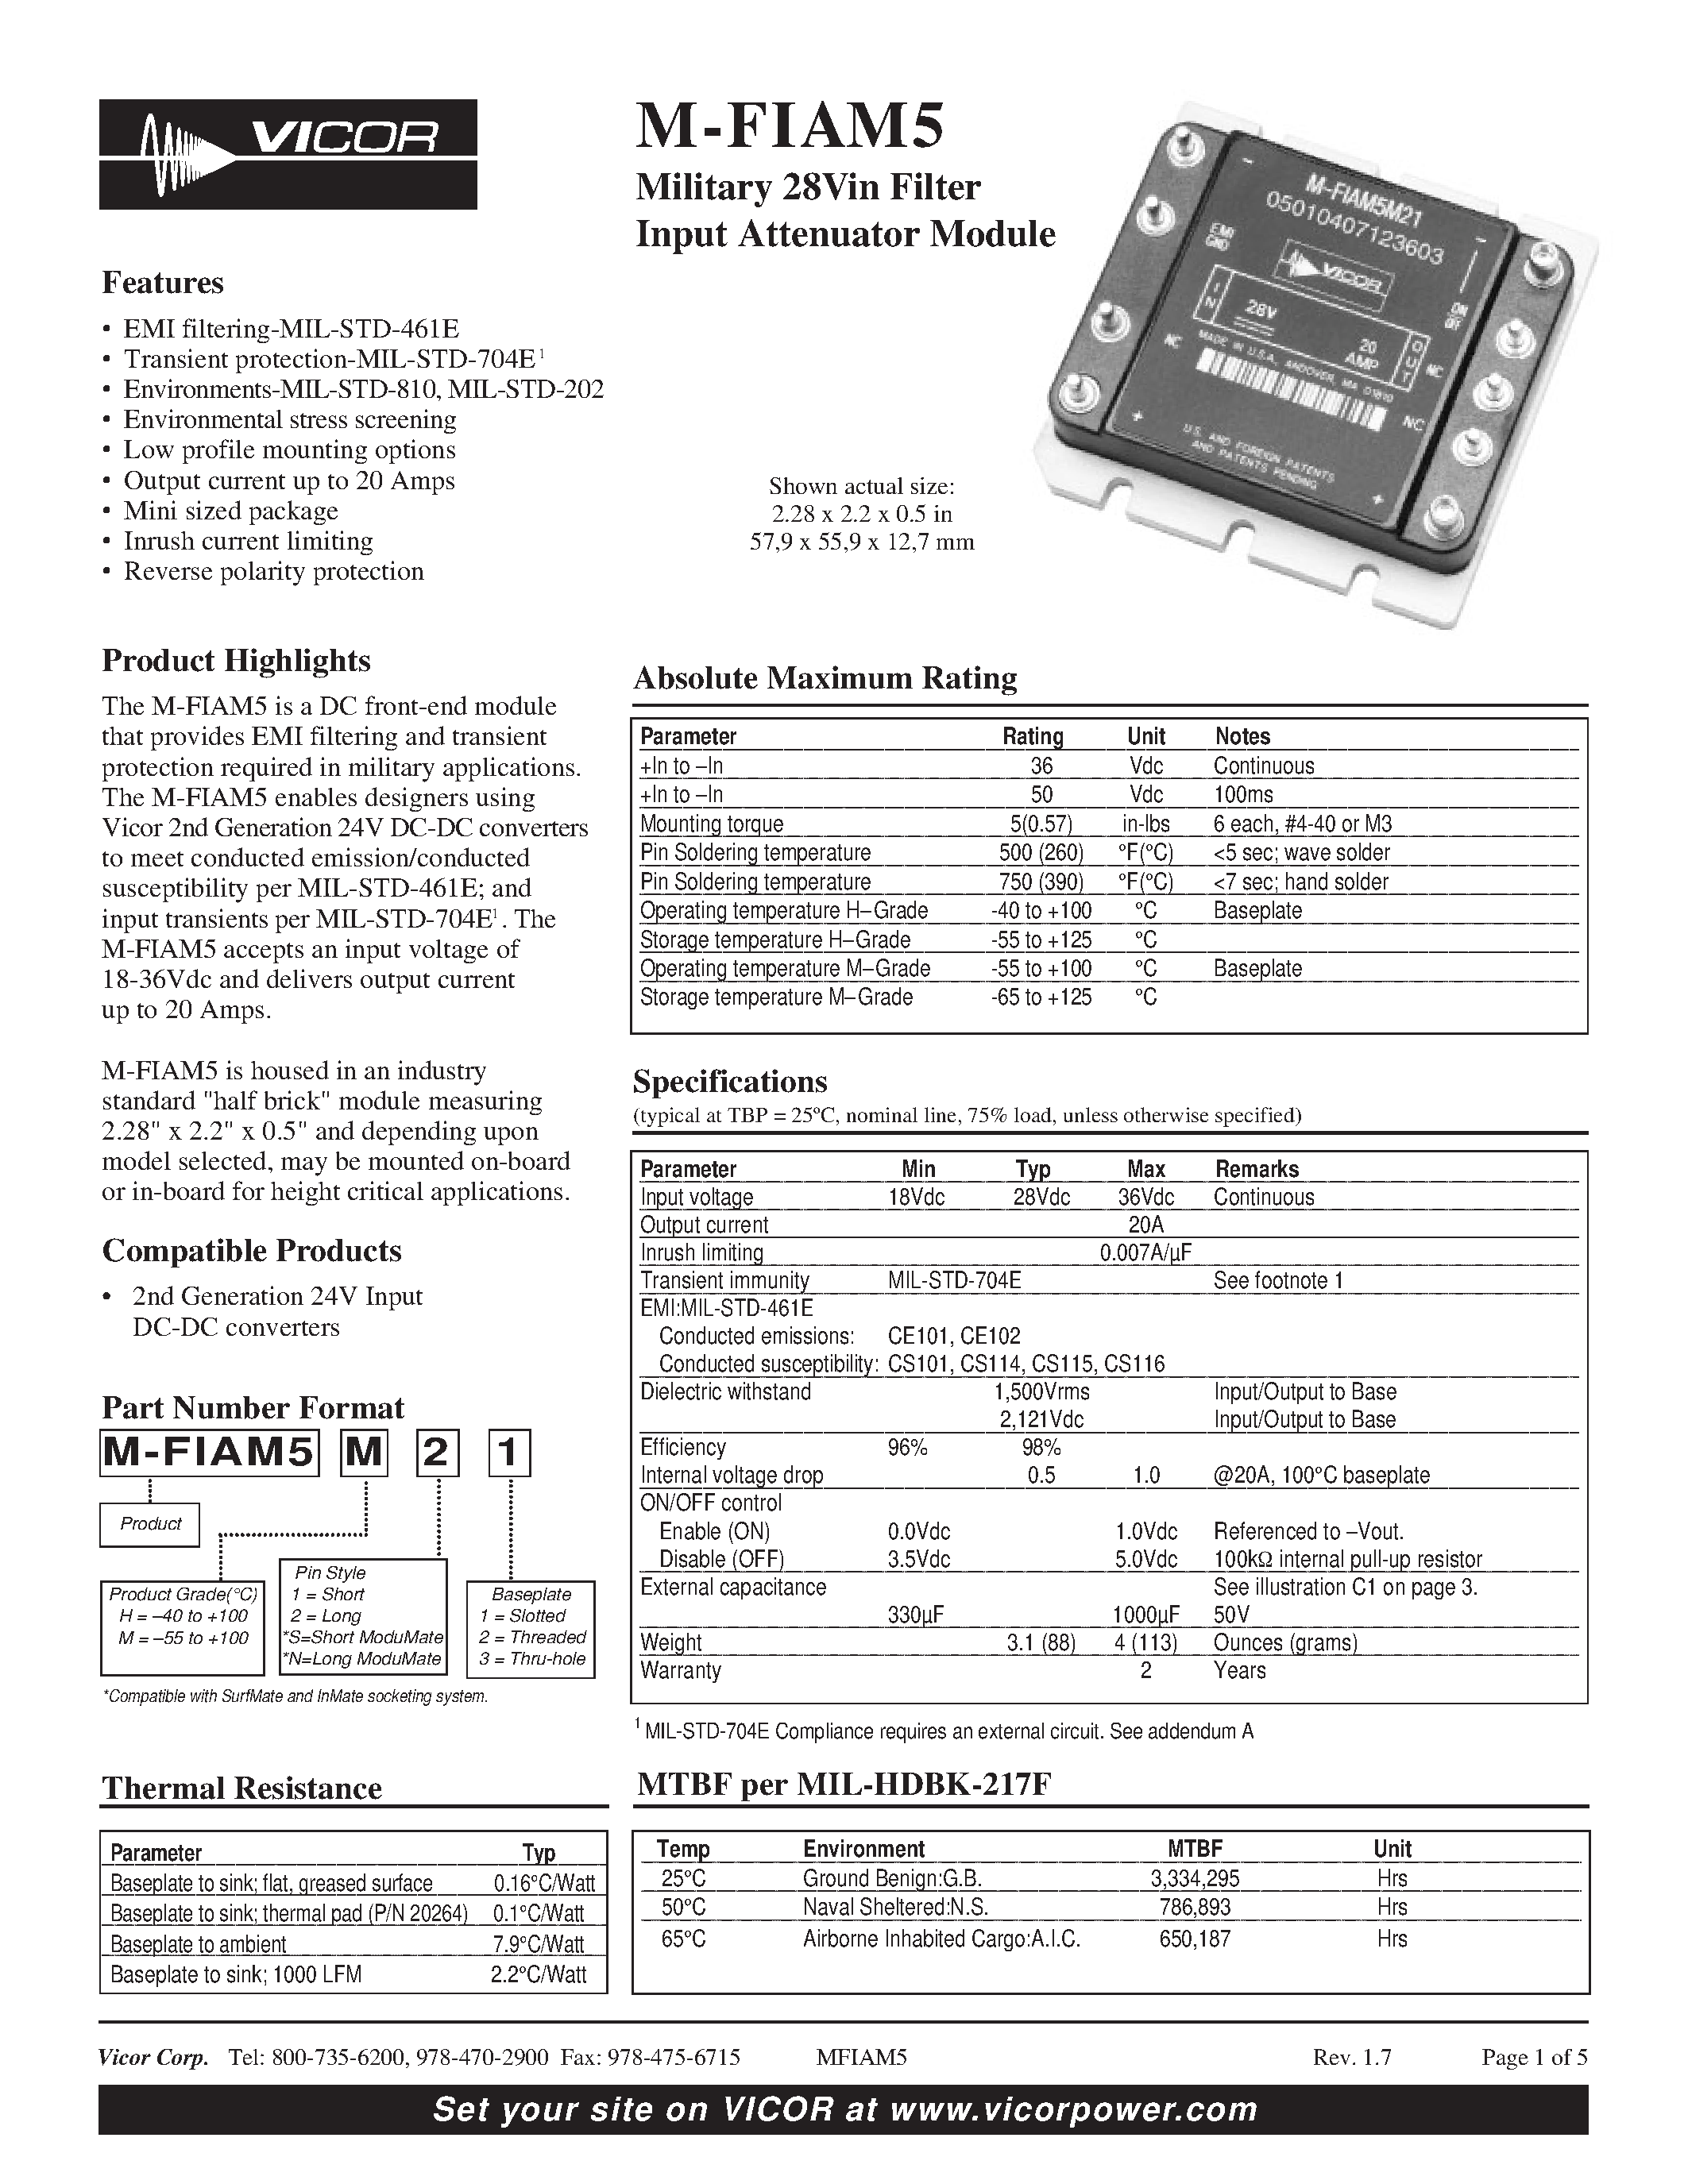 Datasheet M-FIAM5M21 - Military 28Vin Filter Input Attenuator Module page 1